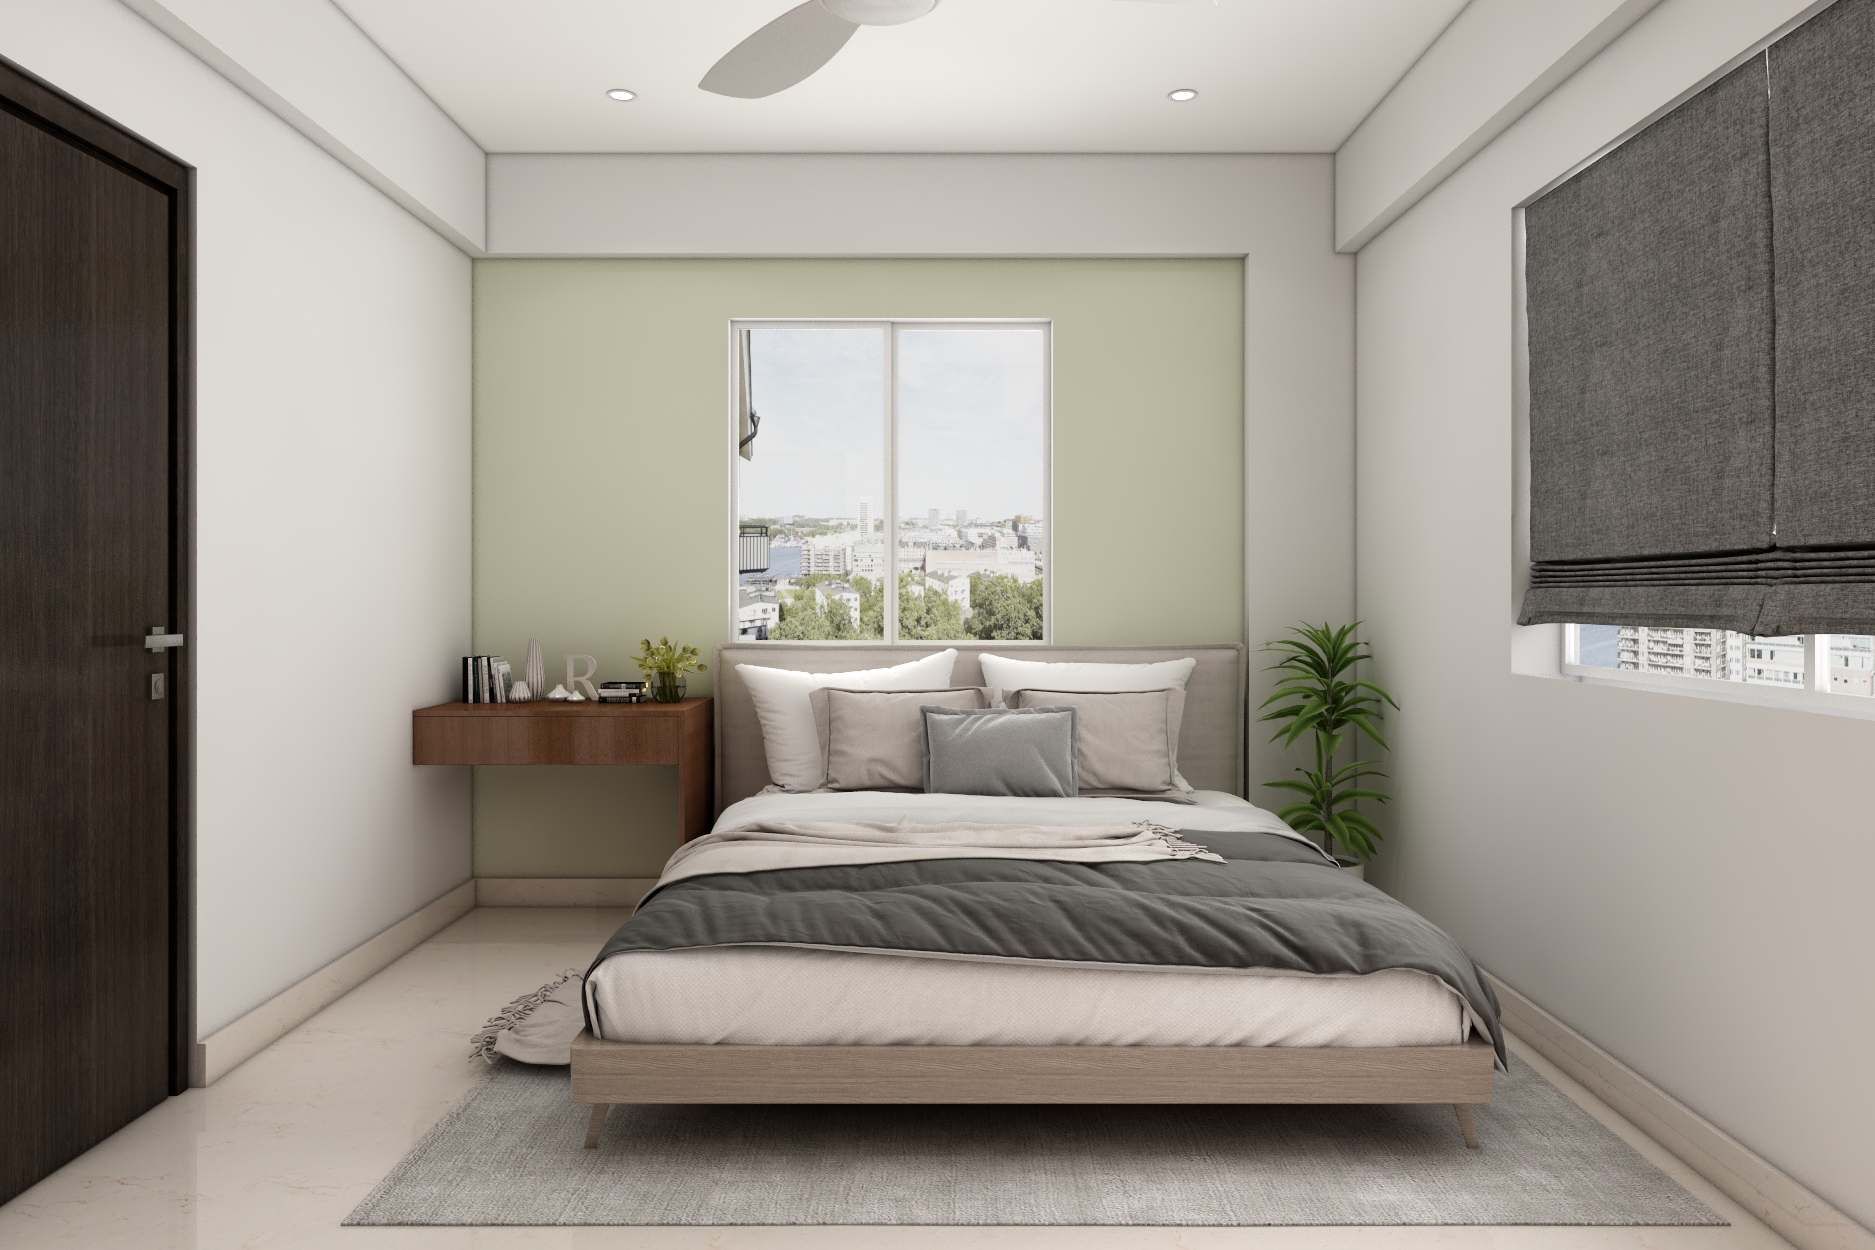 Minimal Guest Bedroom Design For Rental Spaces